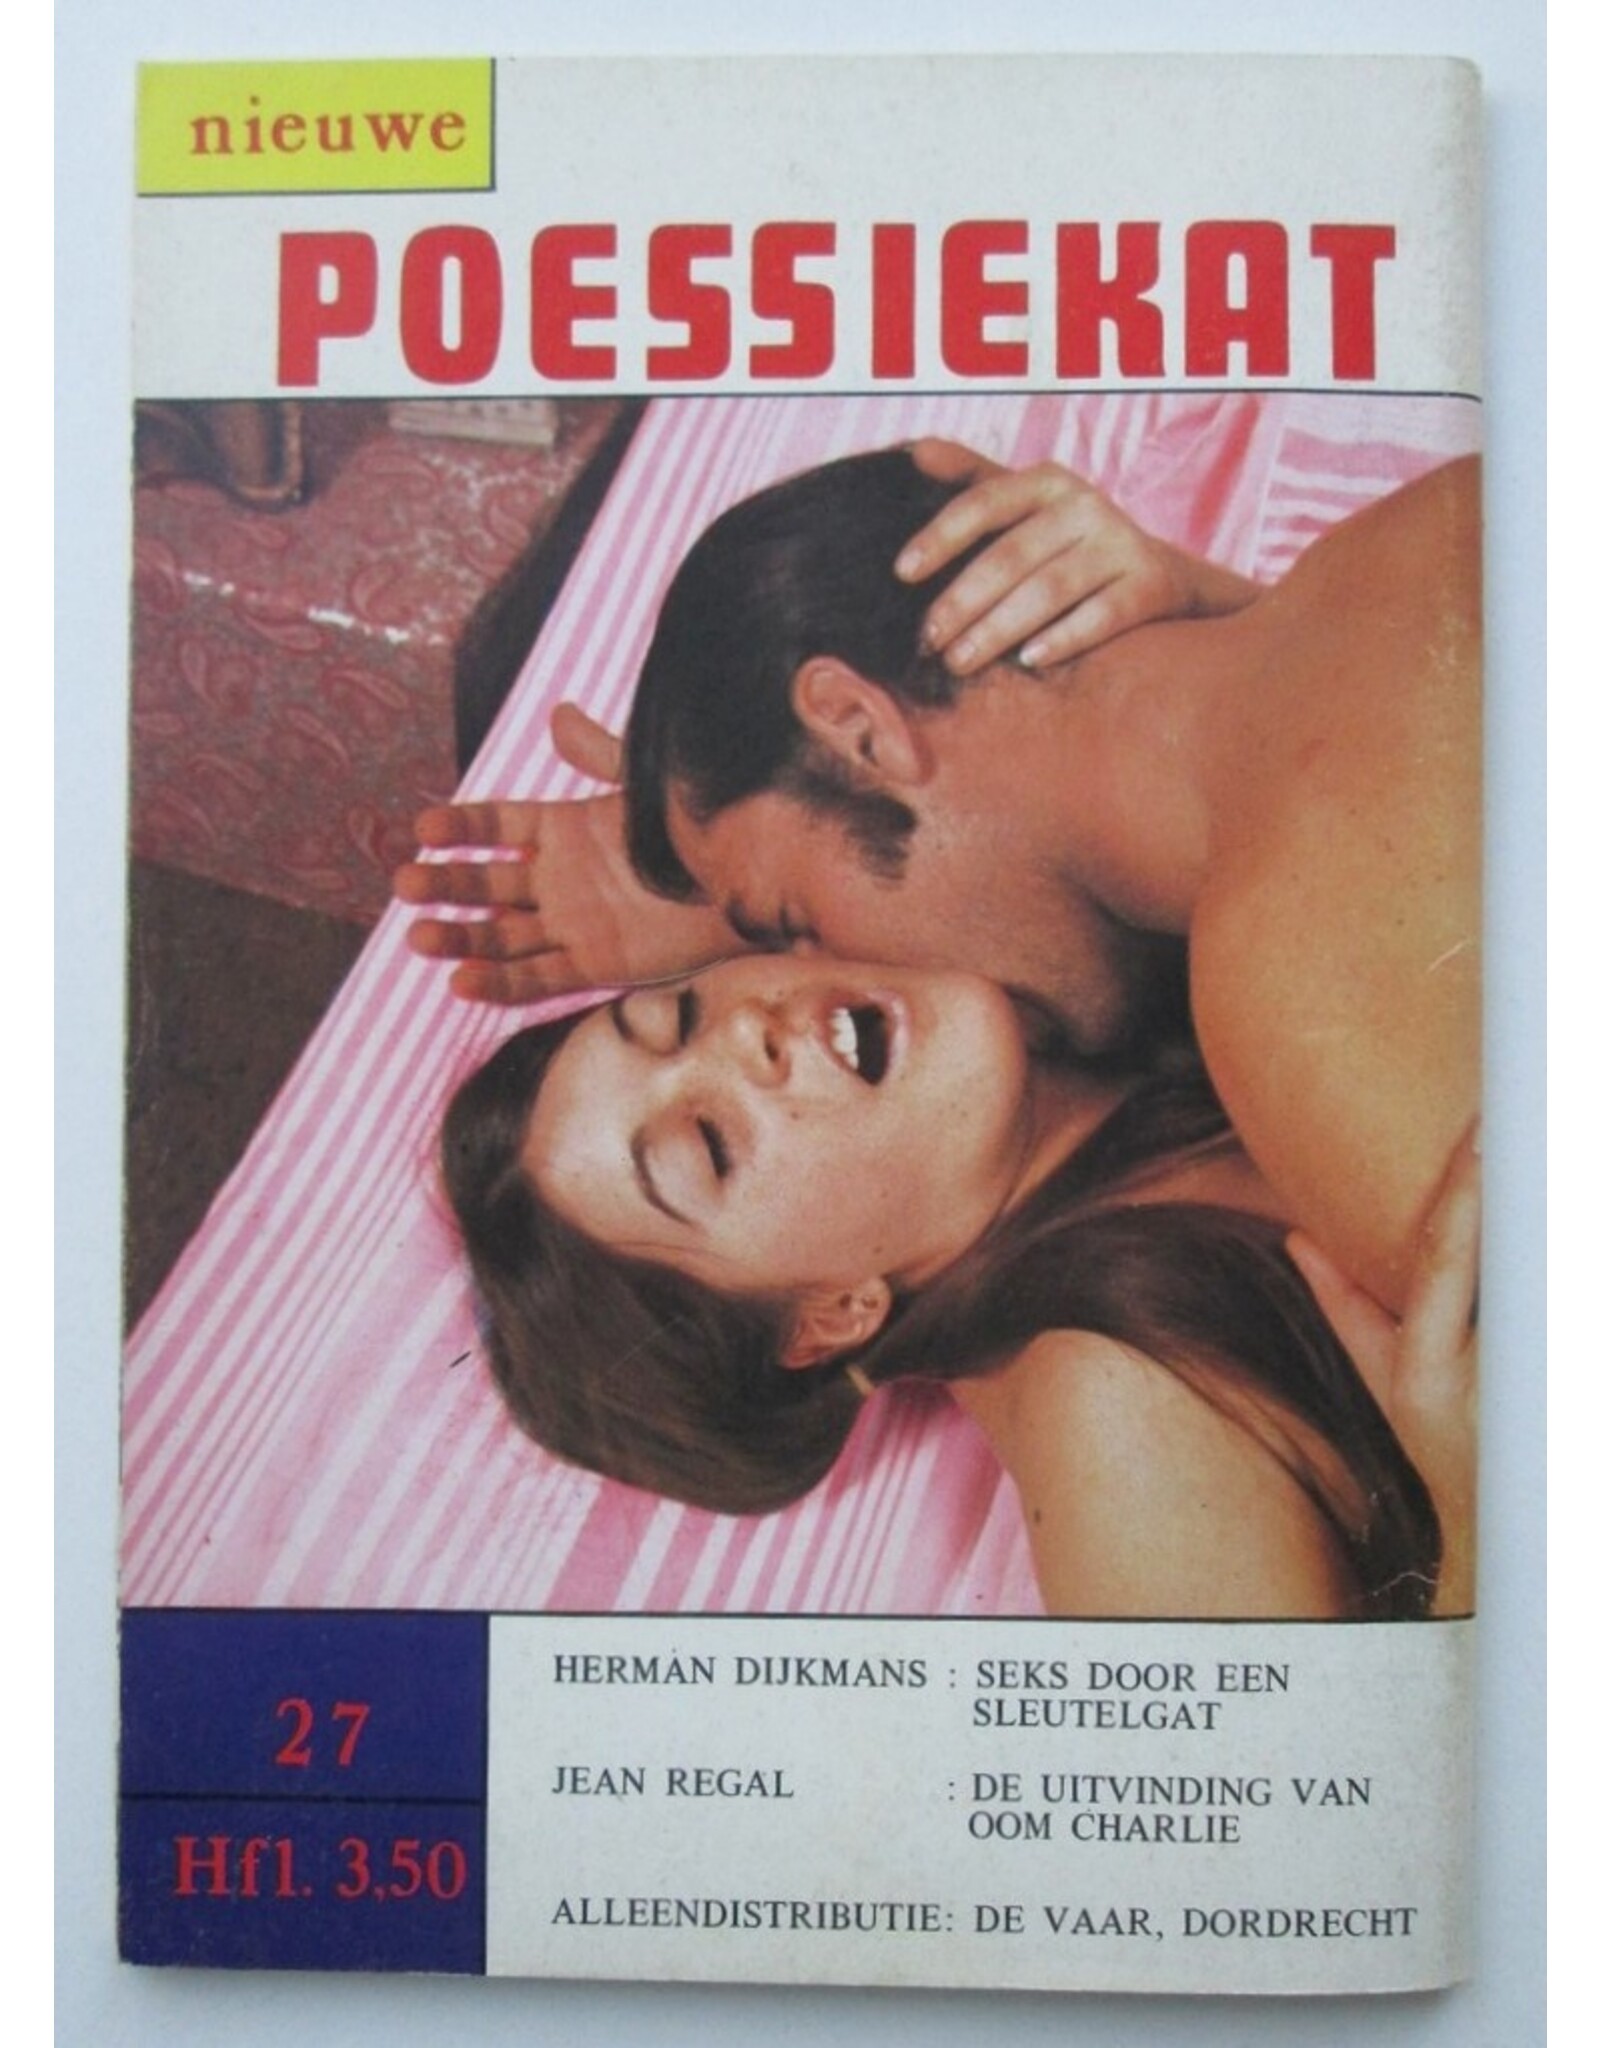 Gerard van der Stelt & Henk Broere [ed.] - Poessiekat. Nummer 27